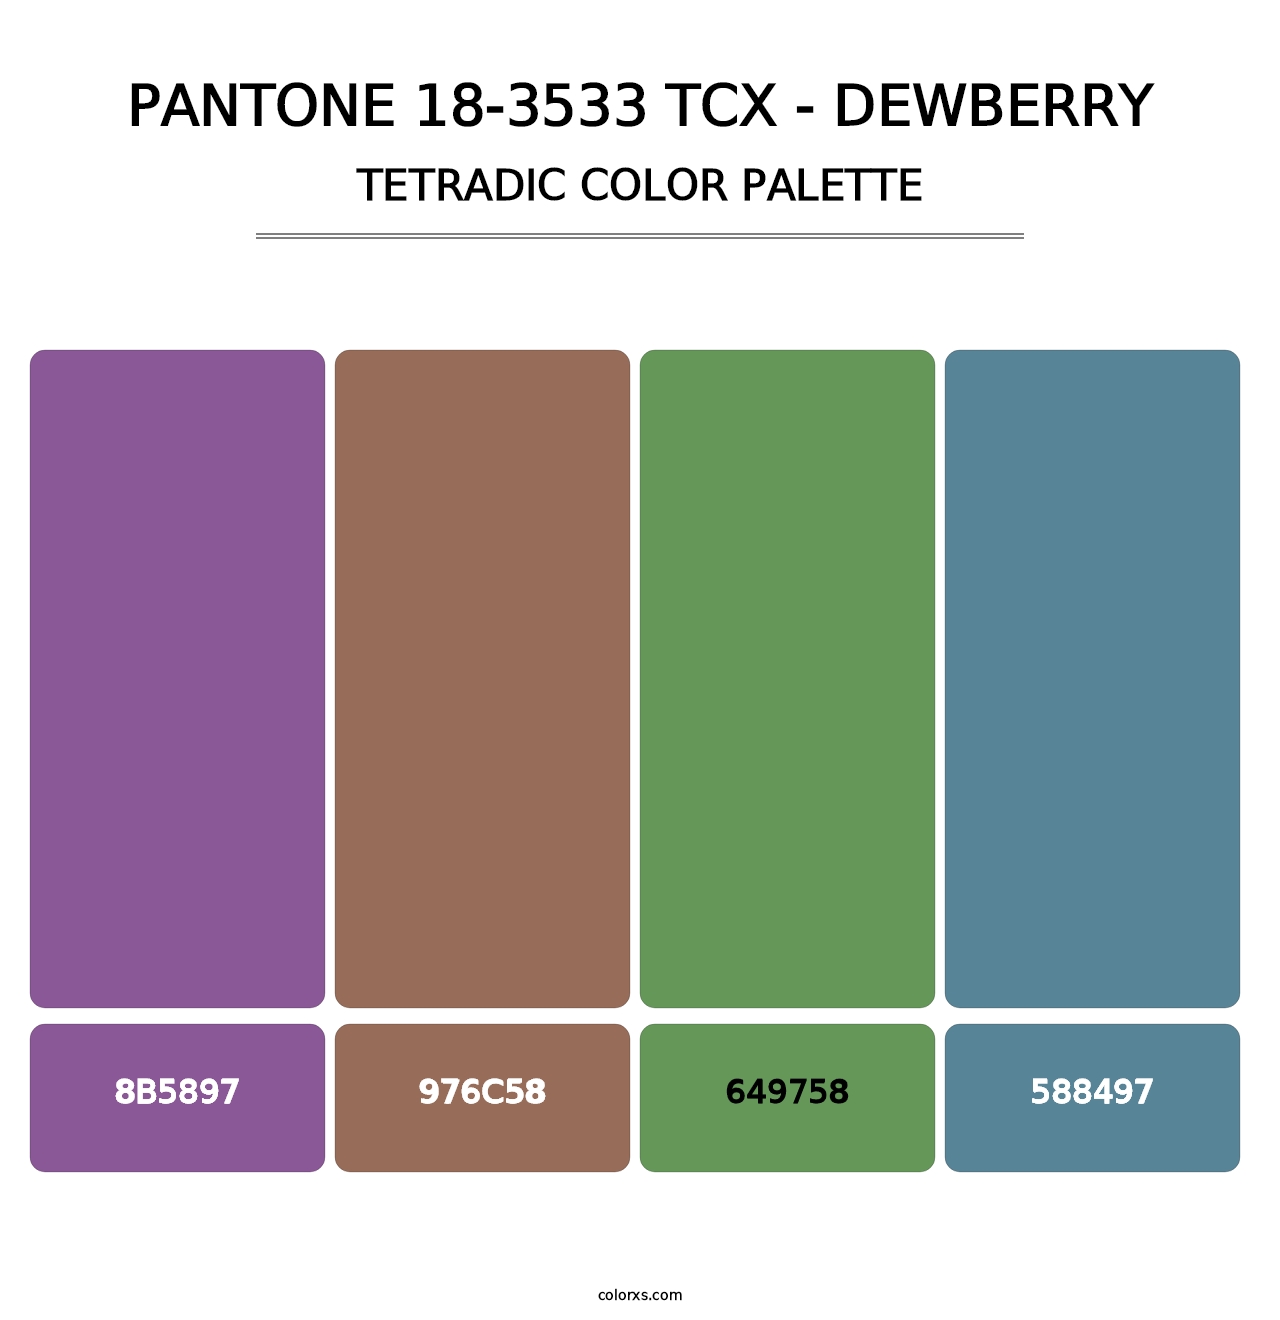 PANTONE 18-3533 TCX - Dewberry - Tetradic Color Palette